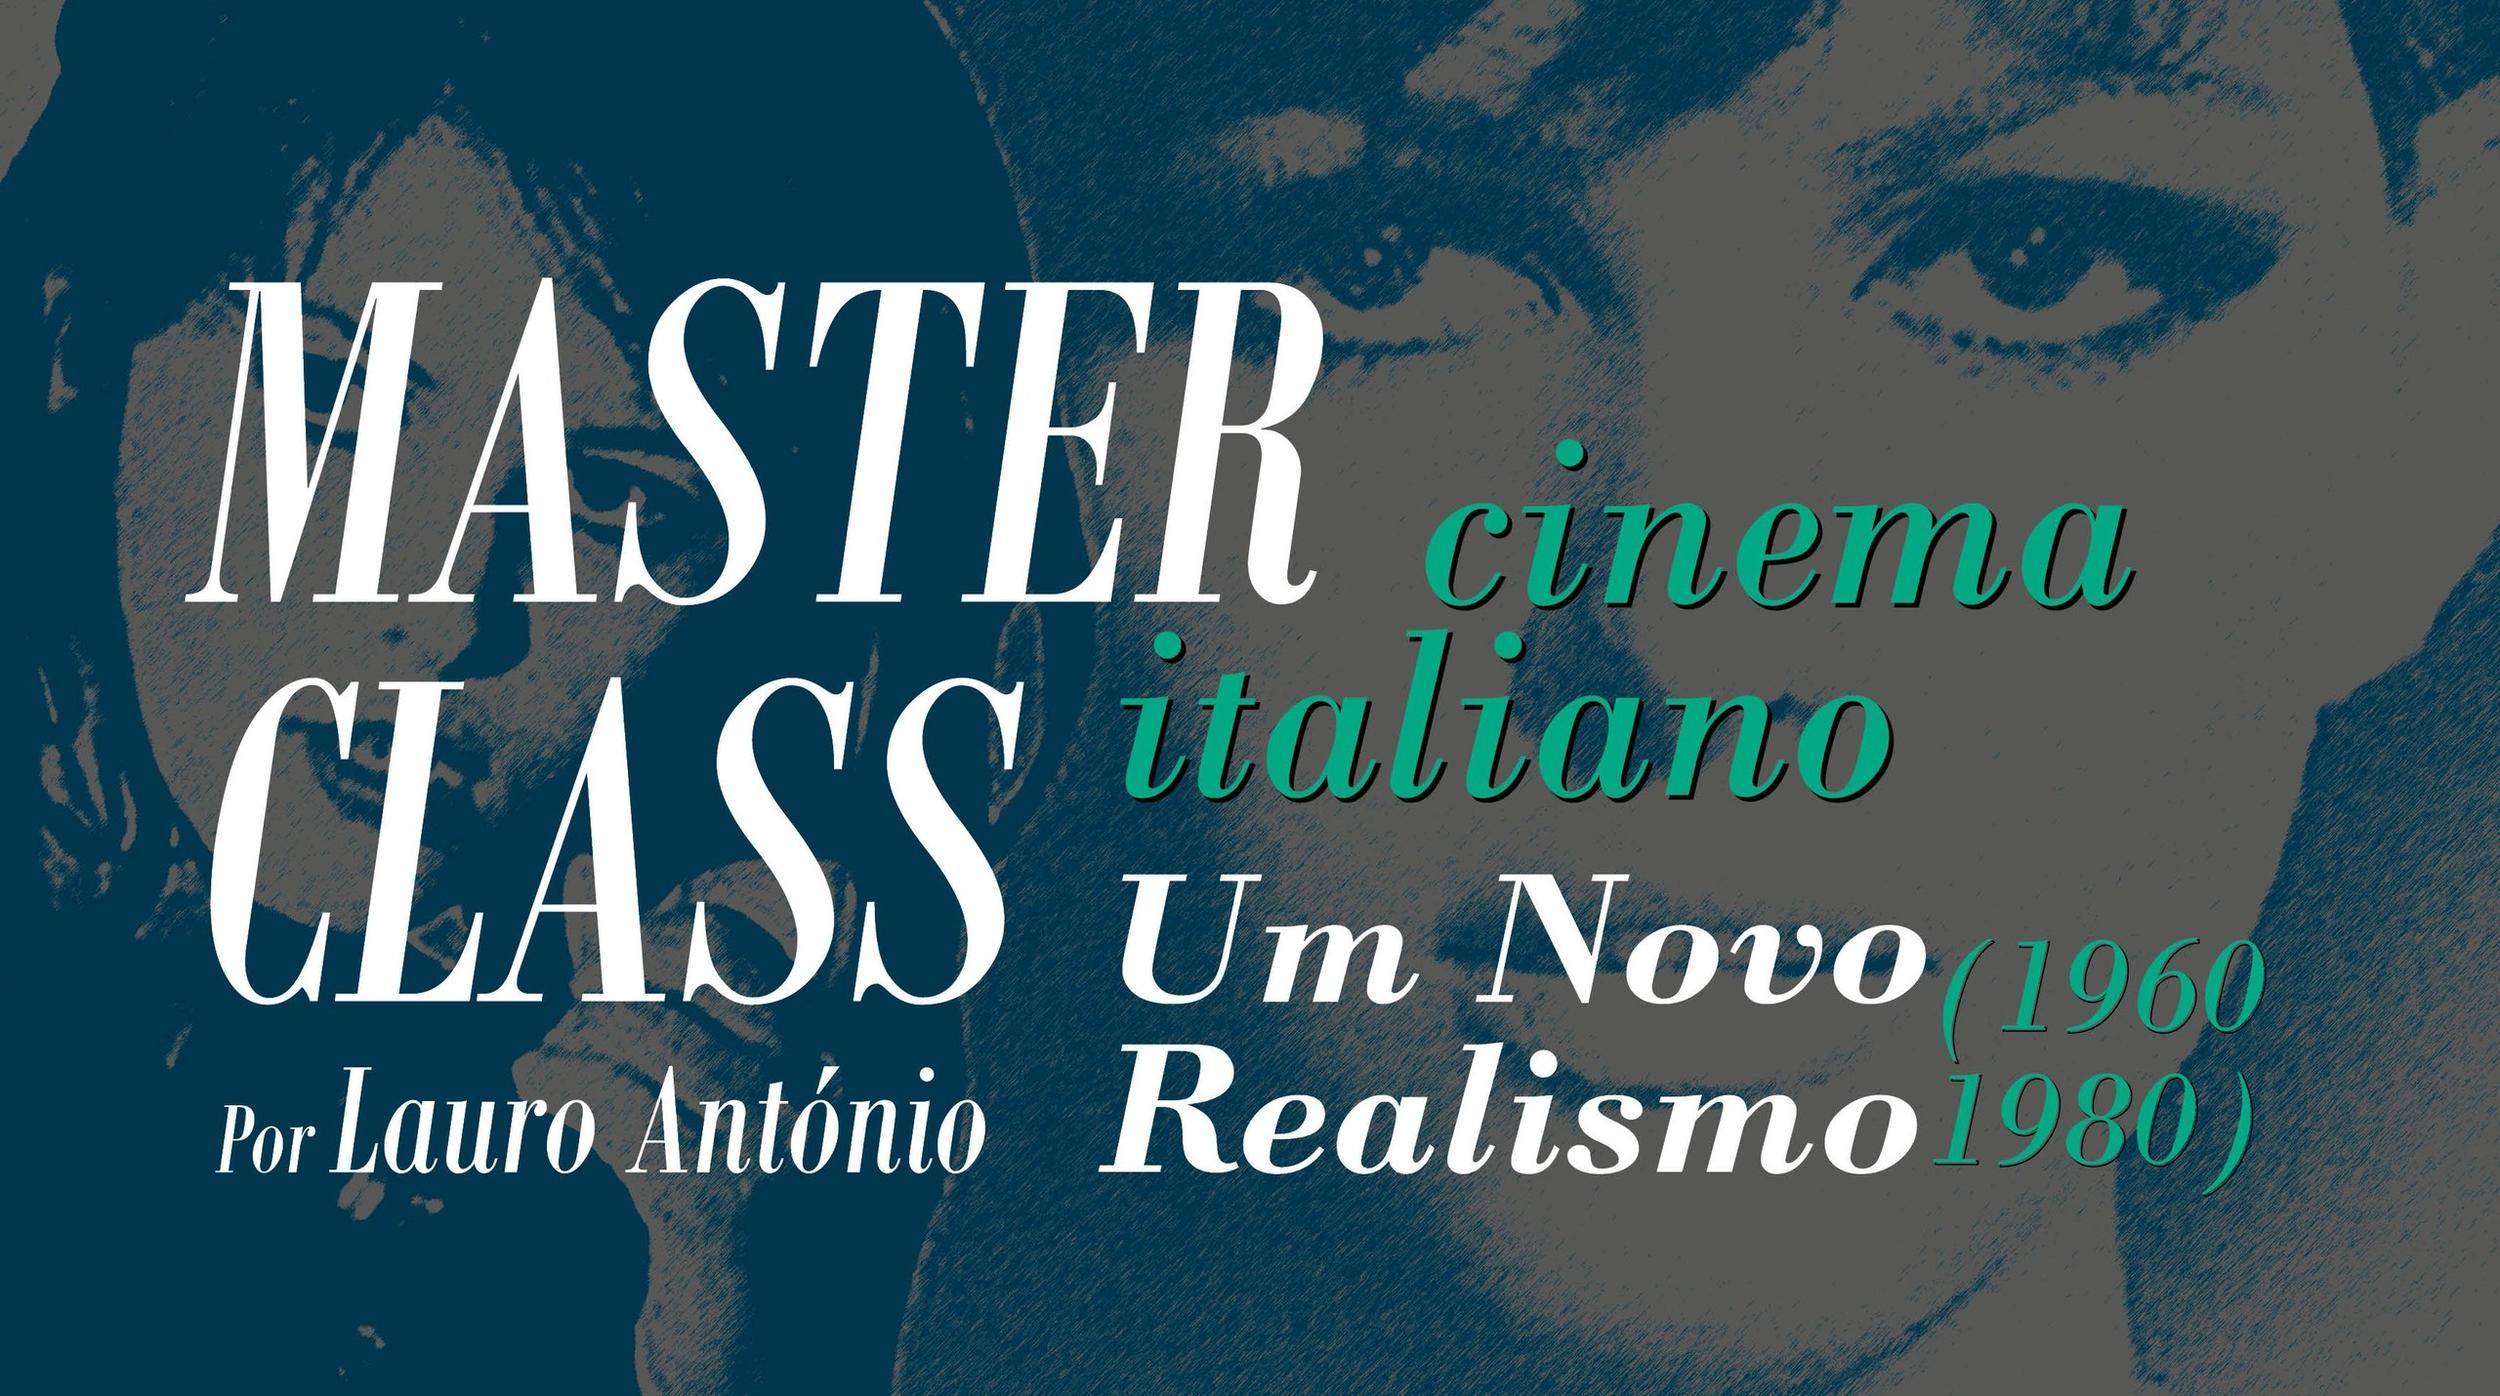 Masterclass Cinema Italiano - um novo realismo (1960-1980)